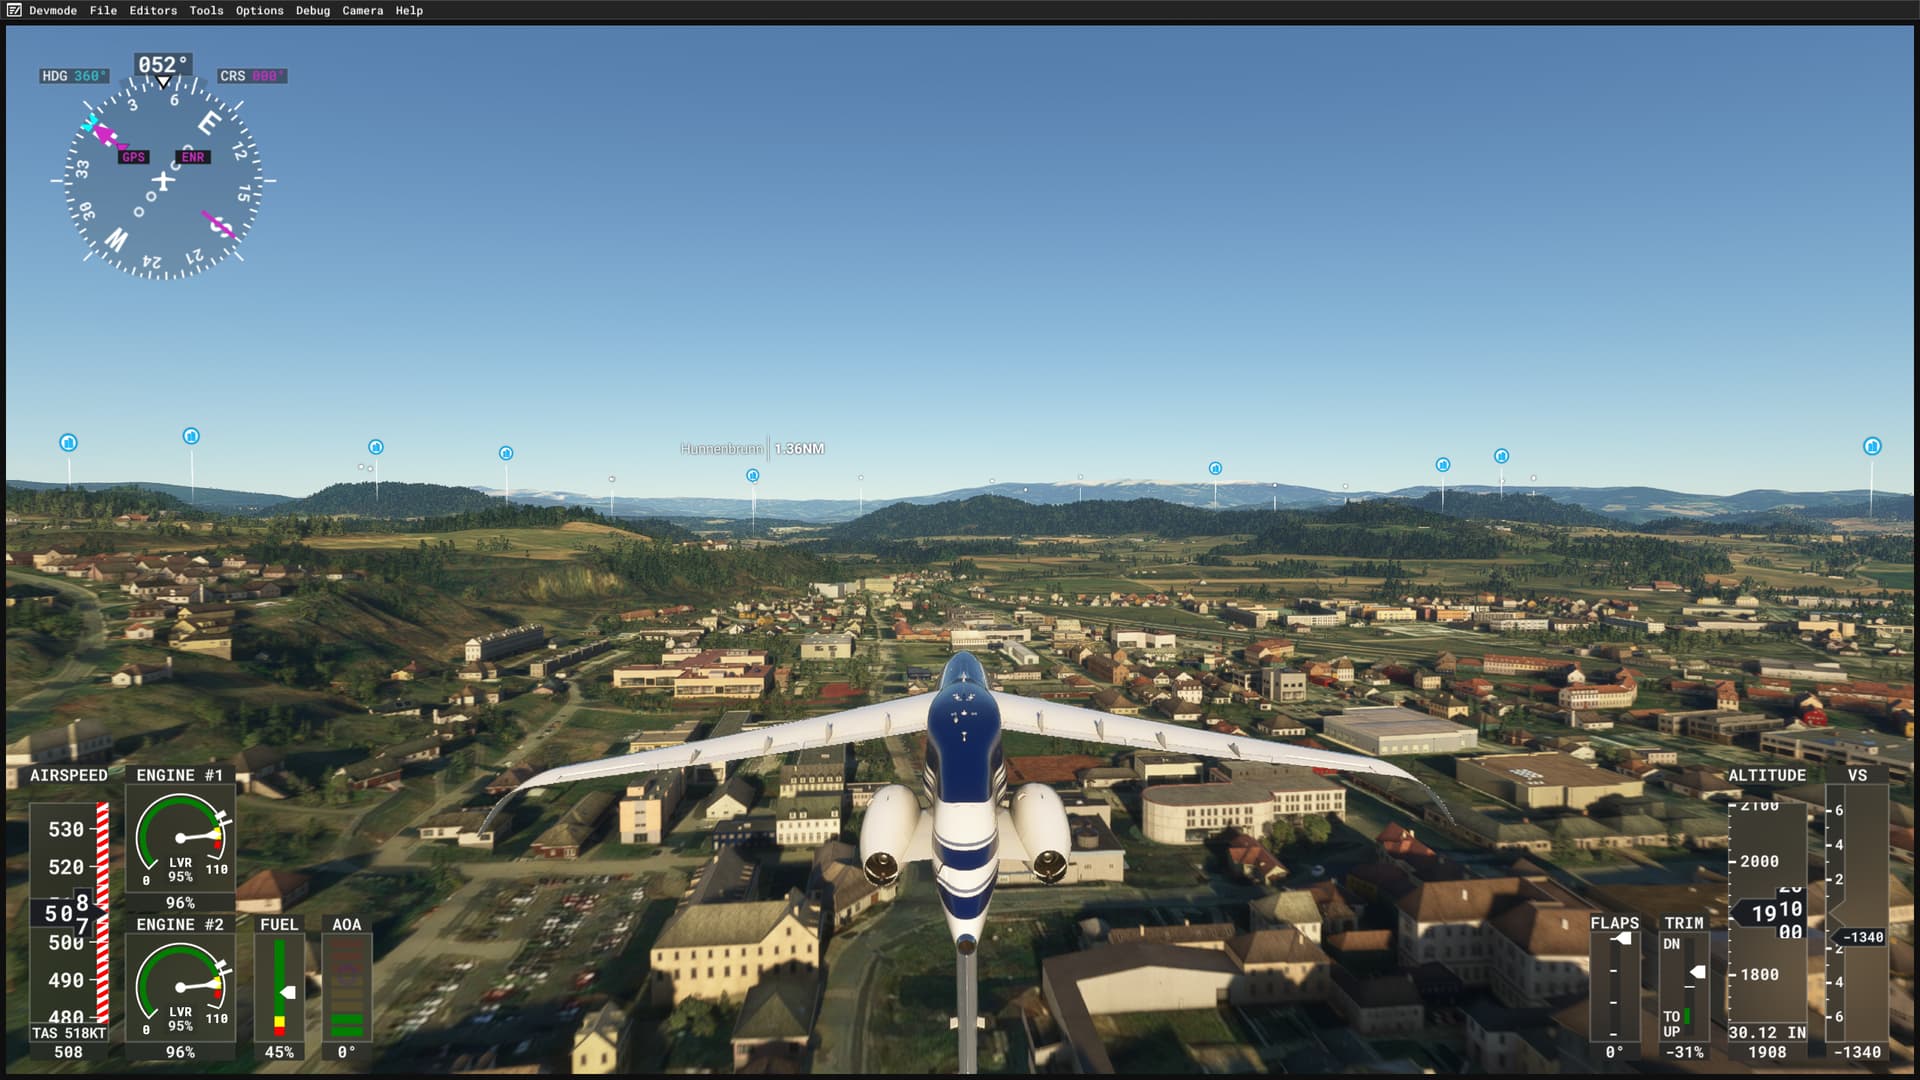 Auto throttle auto-on? - Aircraft & Systems - Microsoft Flight Simulator  Forums